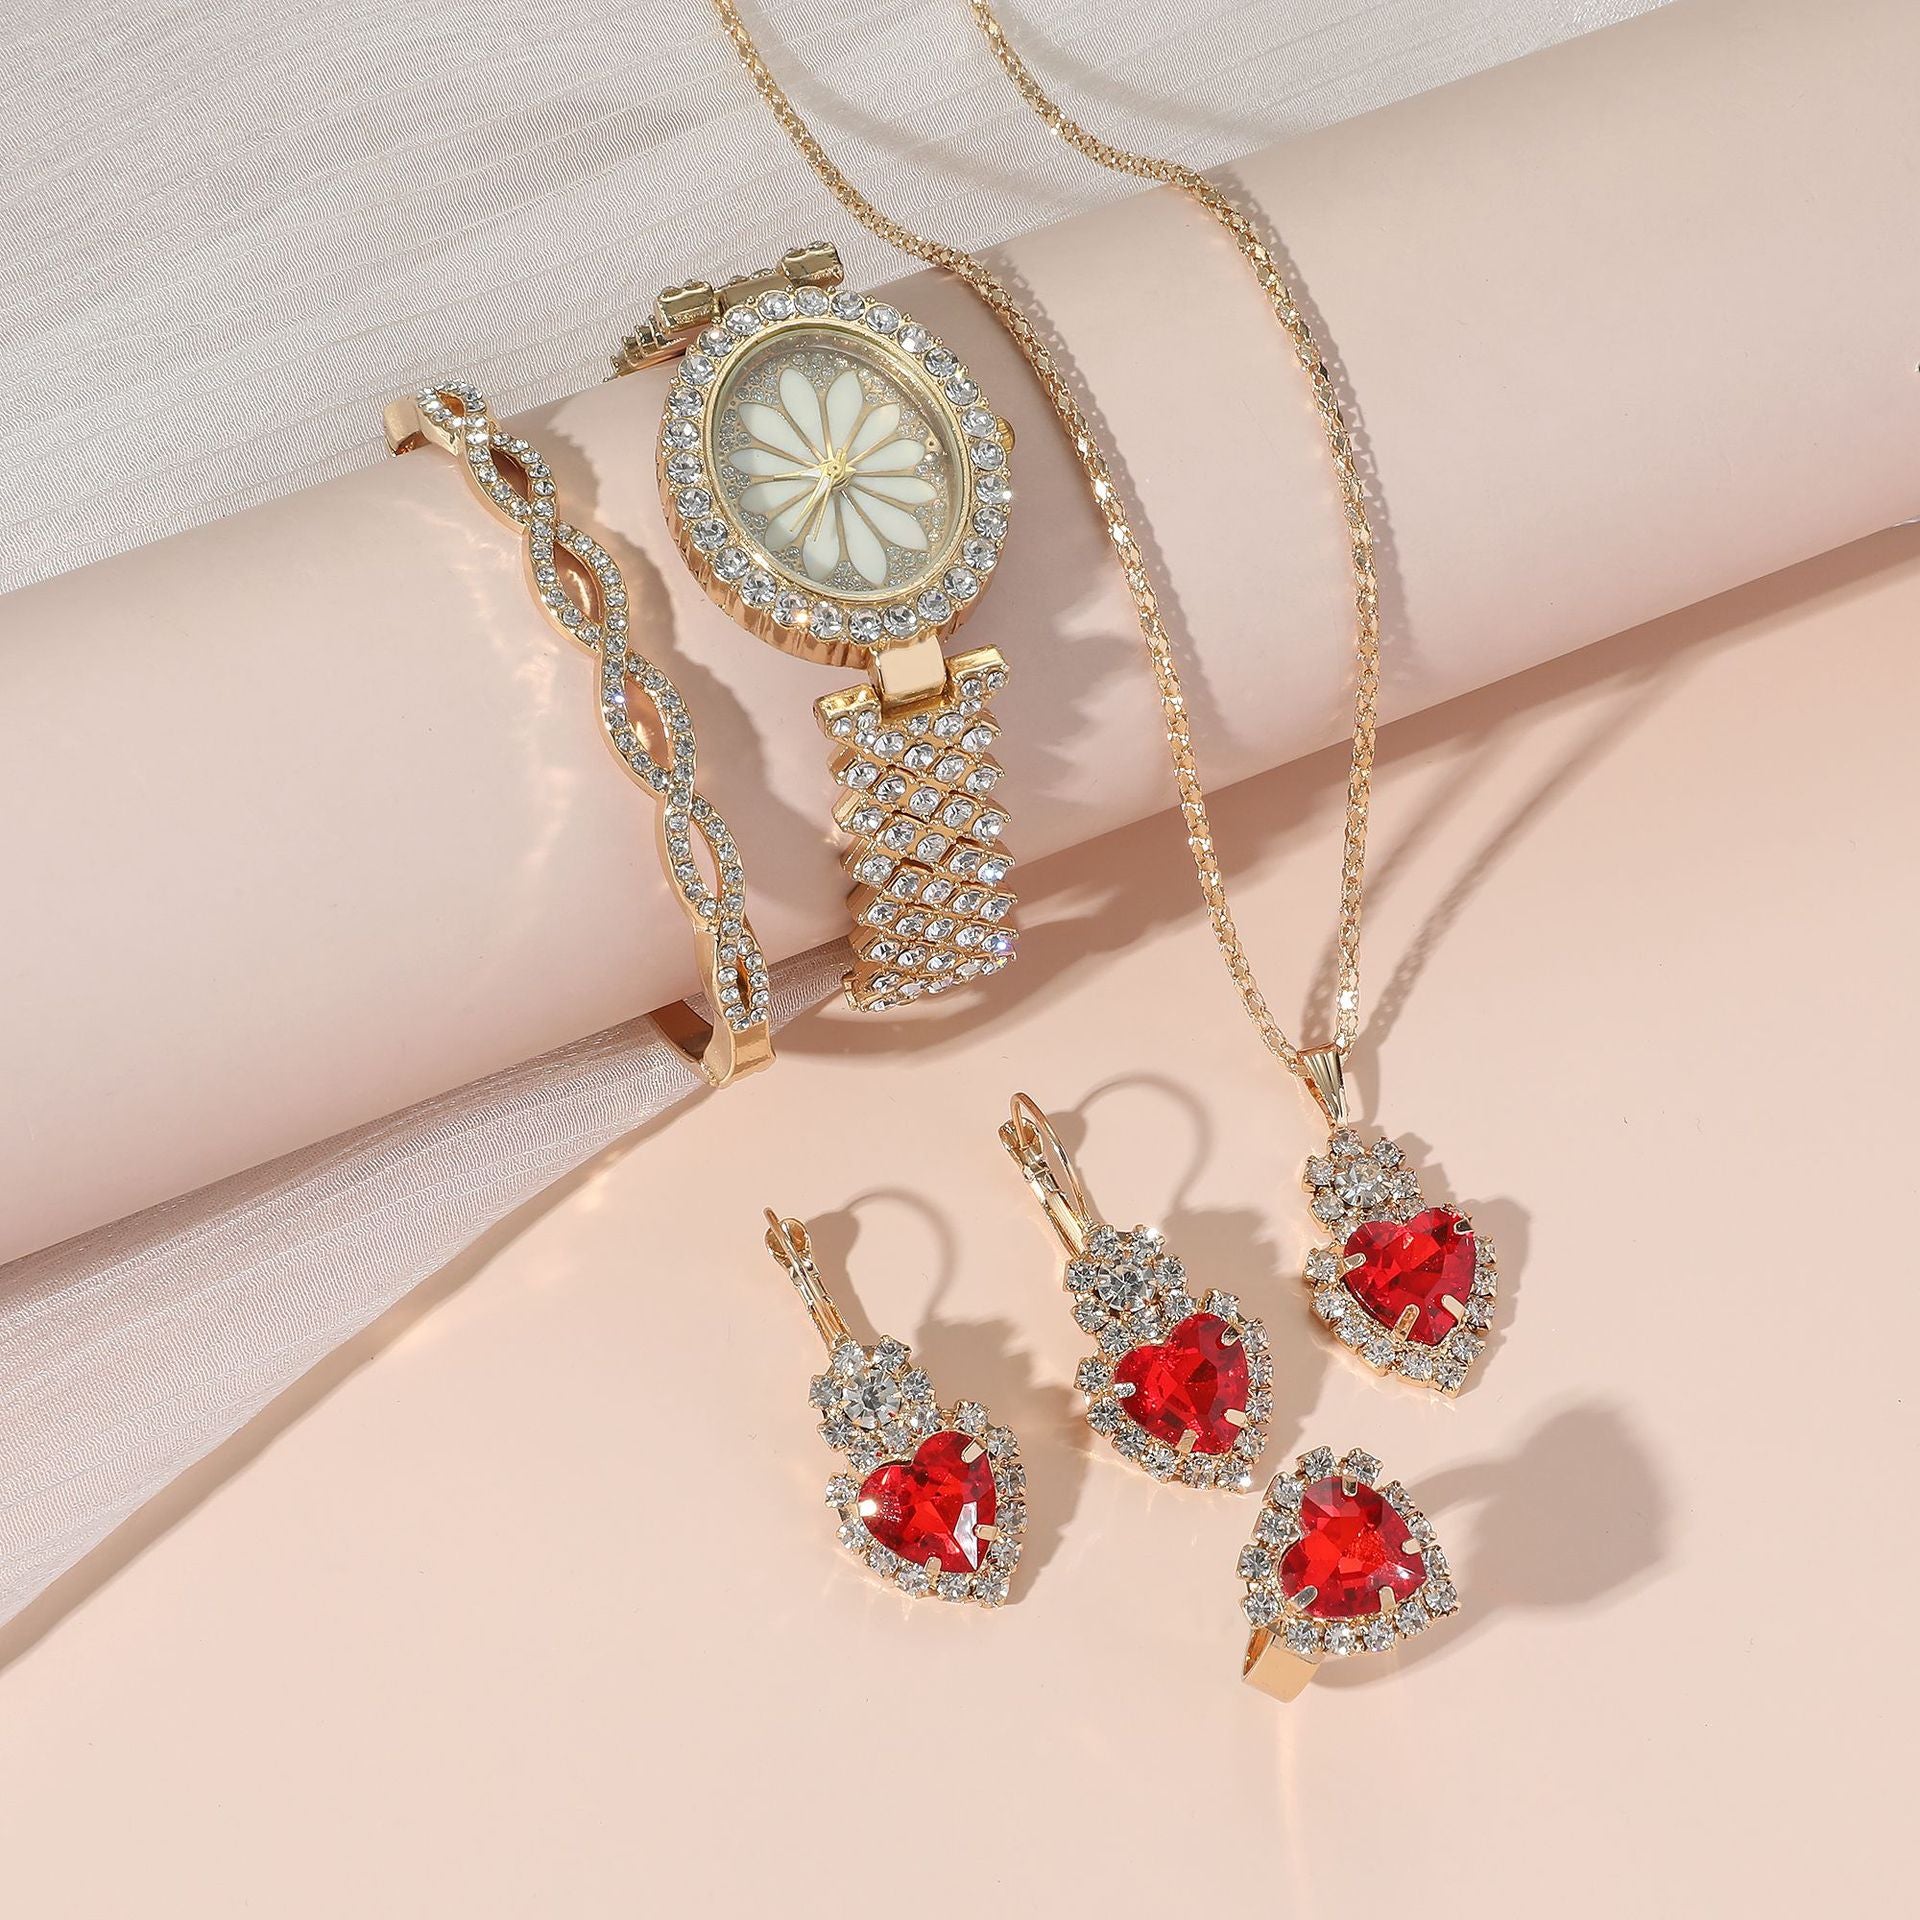 Women Luxury Diamond Wrist Watches gift set with bracelet - MackTechBiz